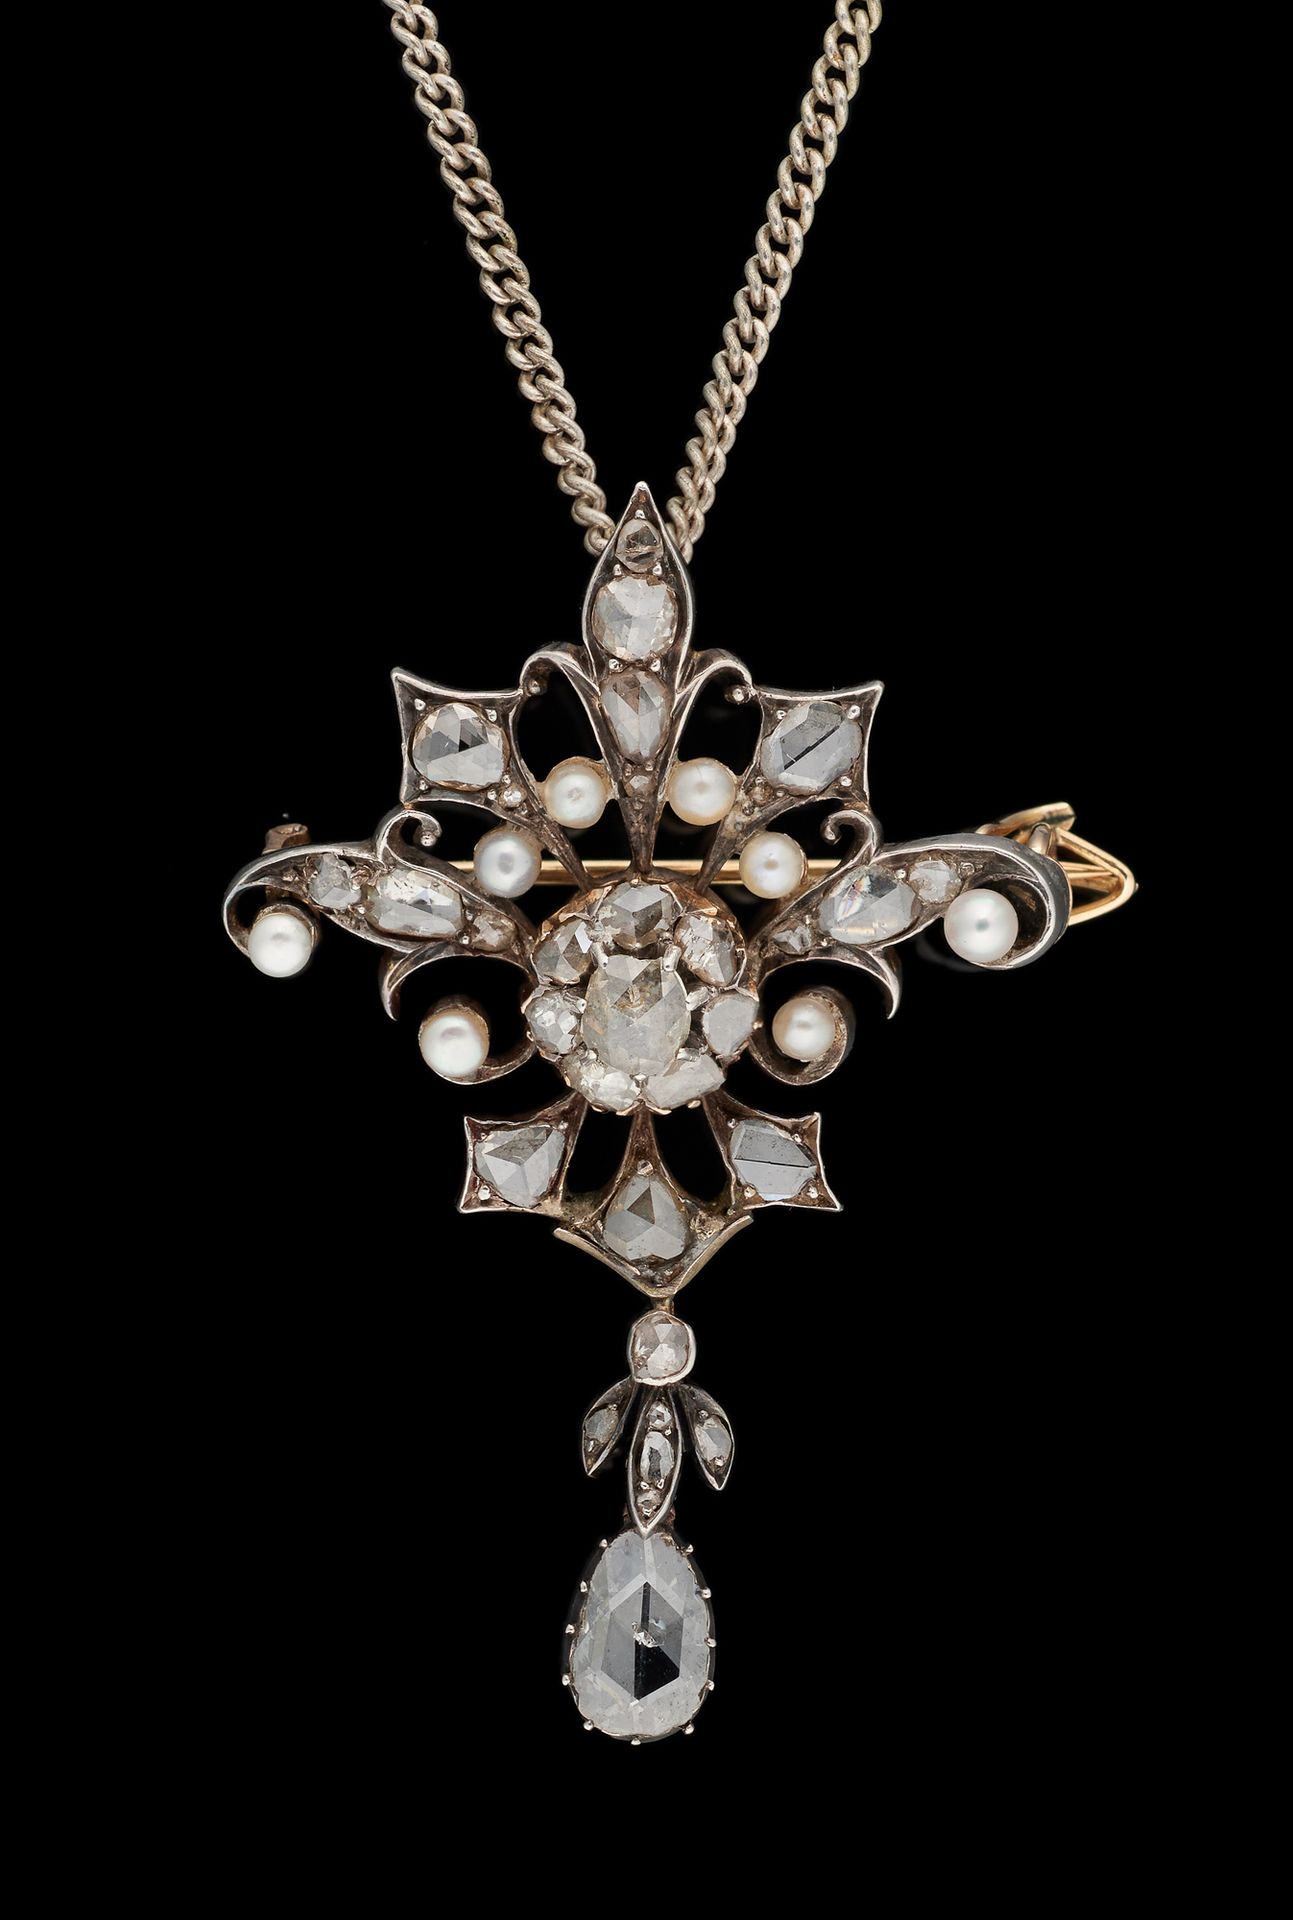 Joaillerie. 珠宝：玫瑰切割钻石和珍珠的吊坠项链。

尺寸：5,6 x 4厘米。